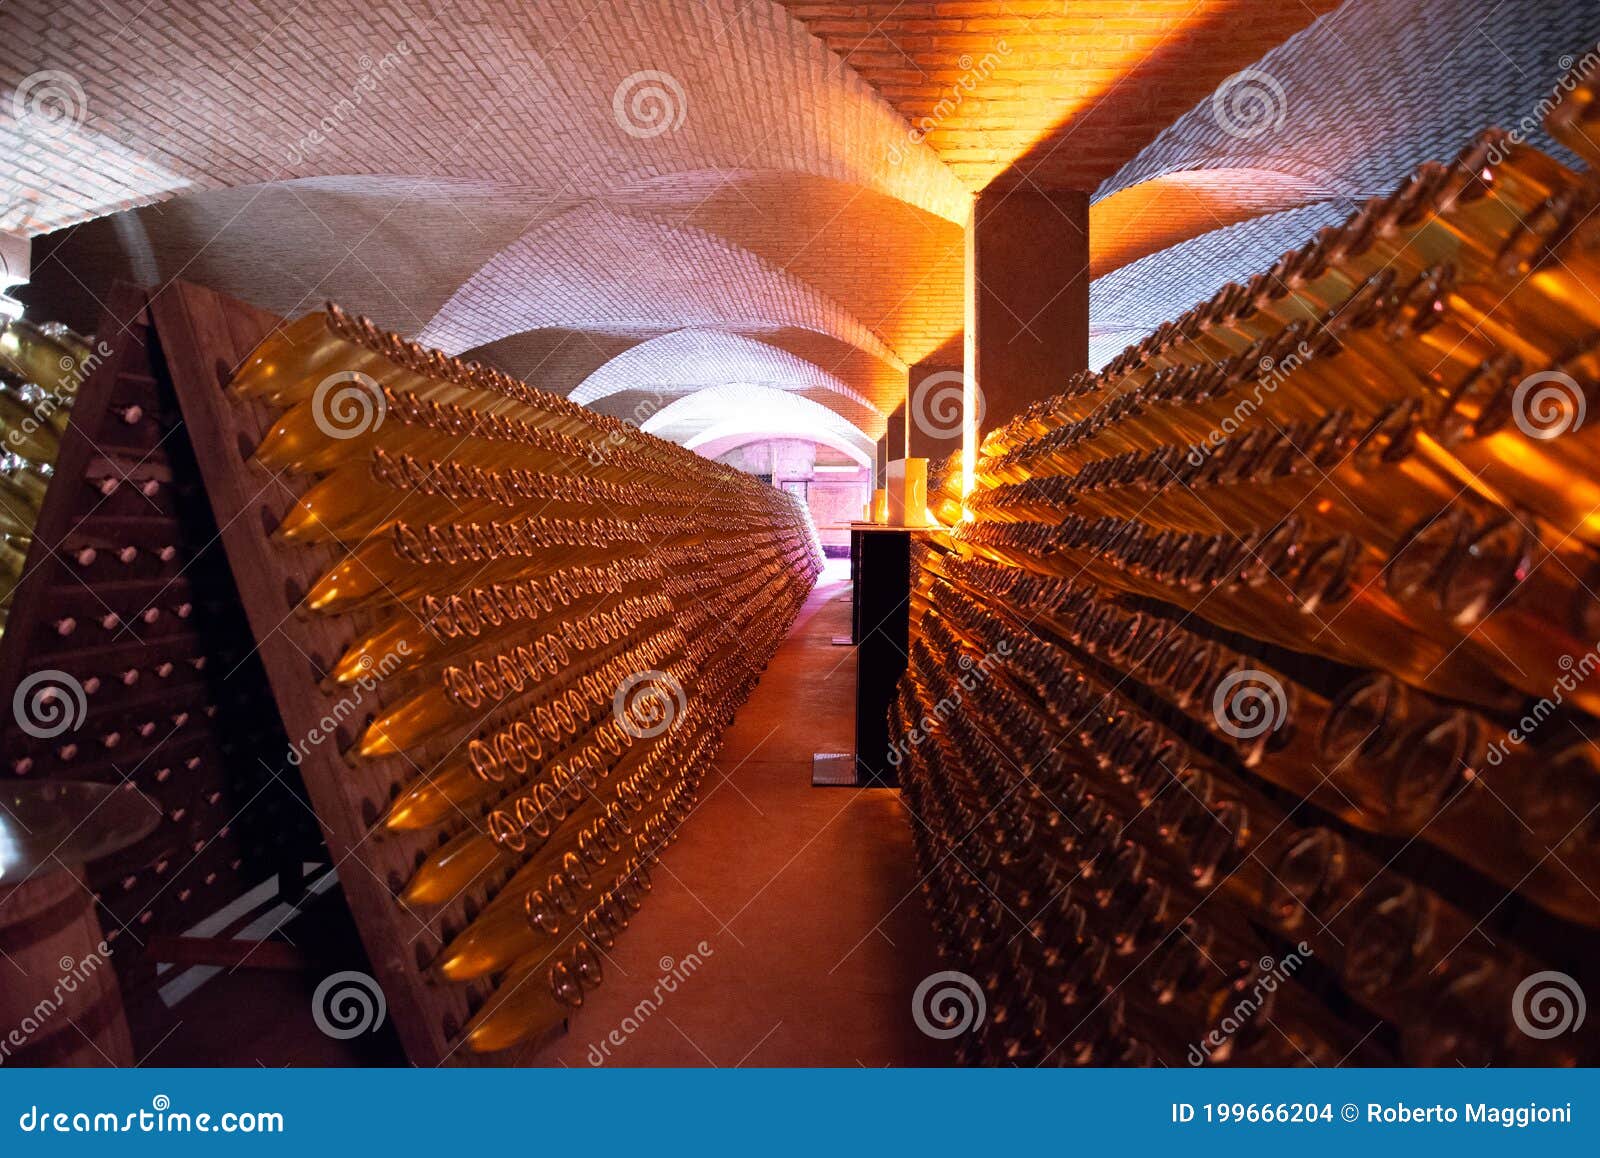 franciacorta, lombardy, italy. wine cellar, interior view